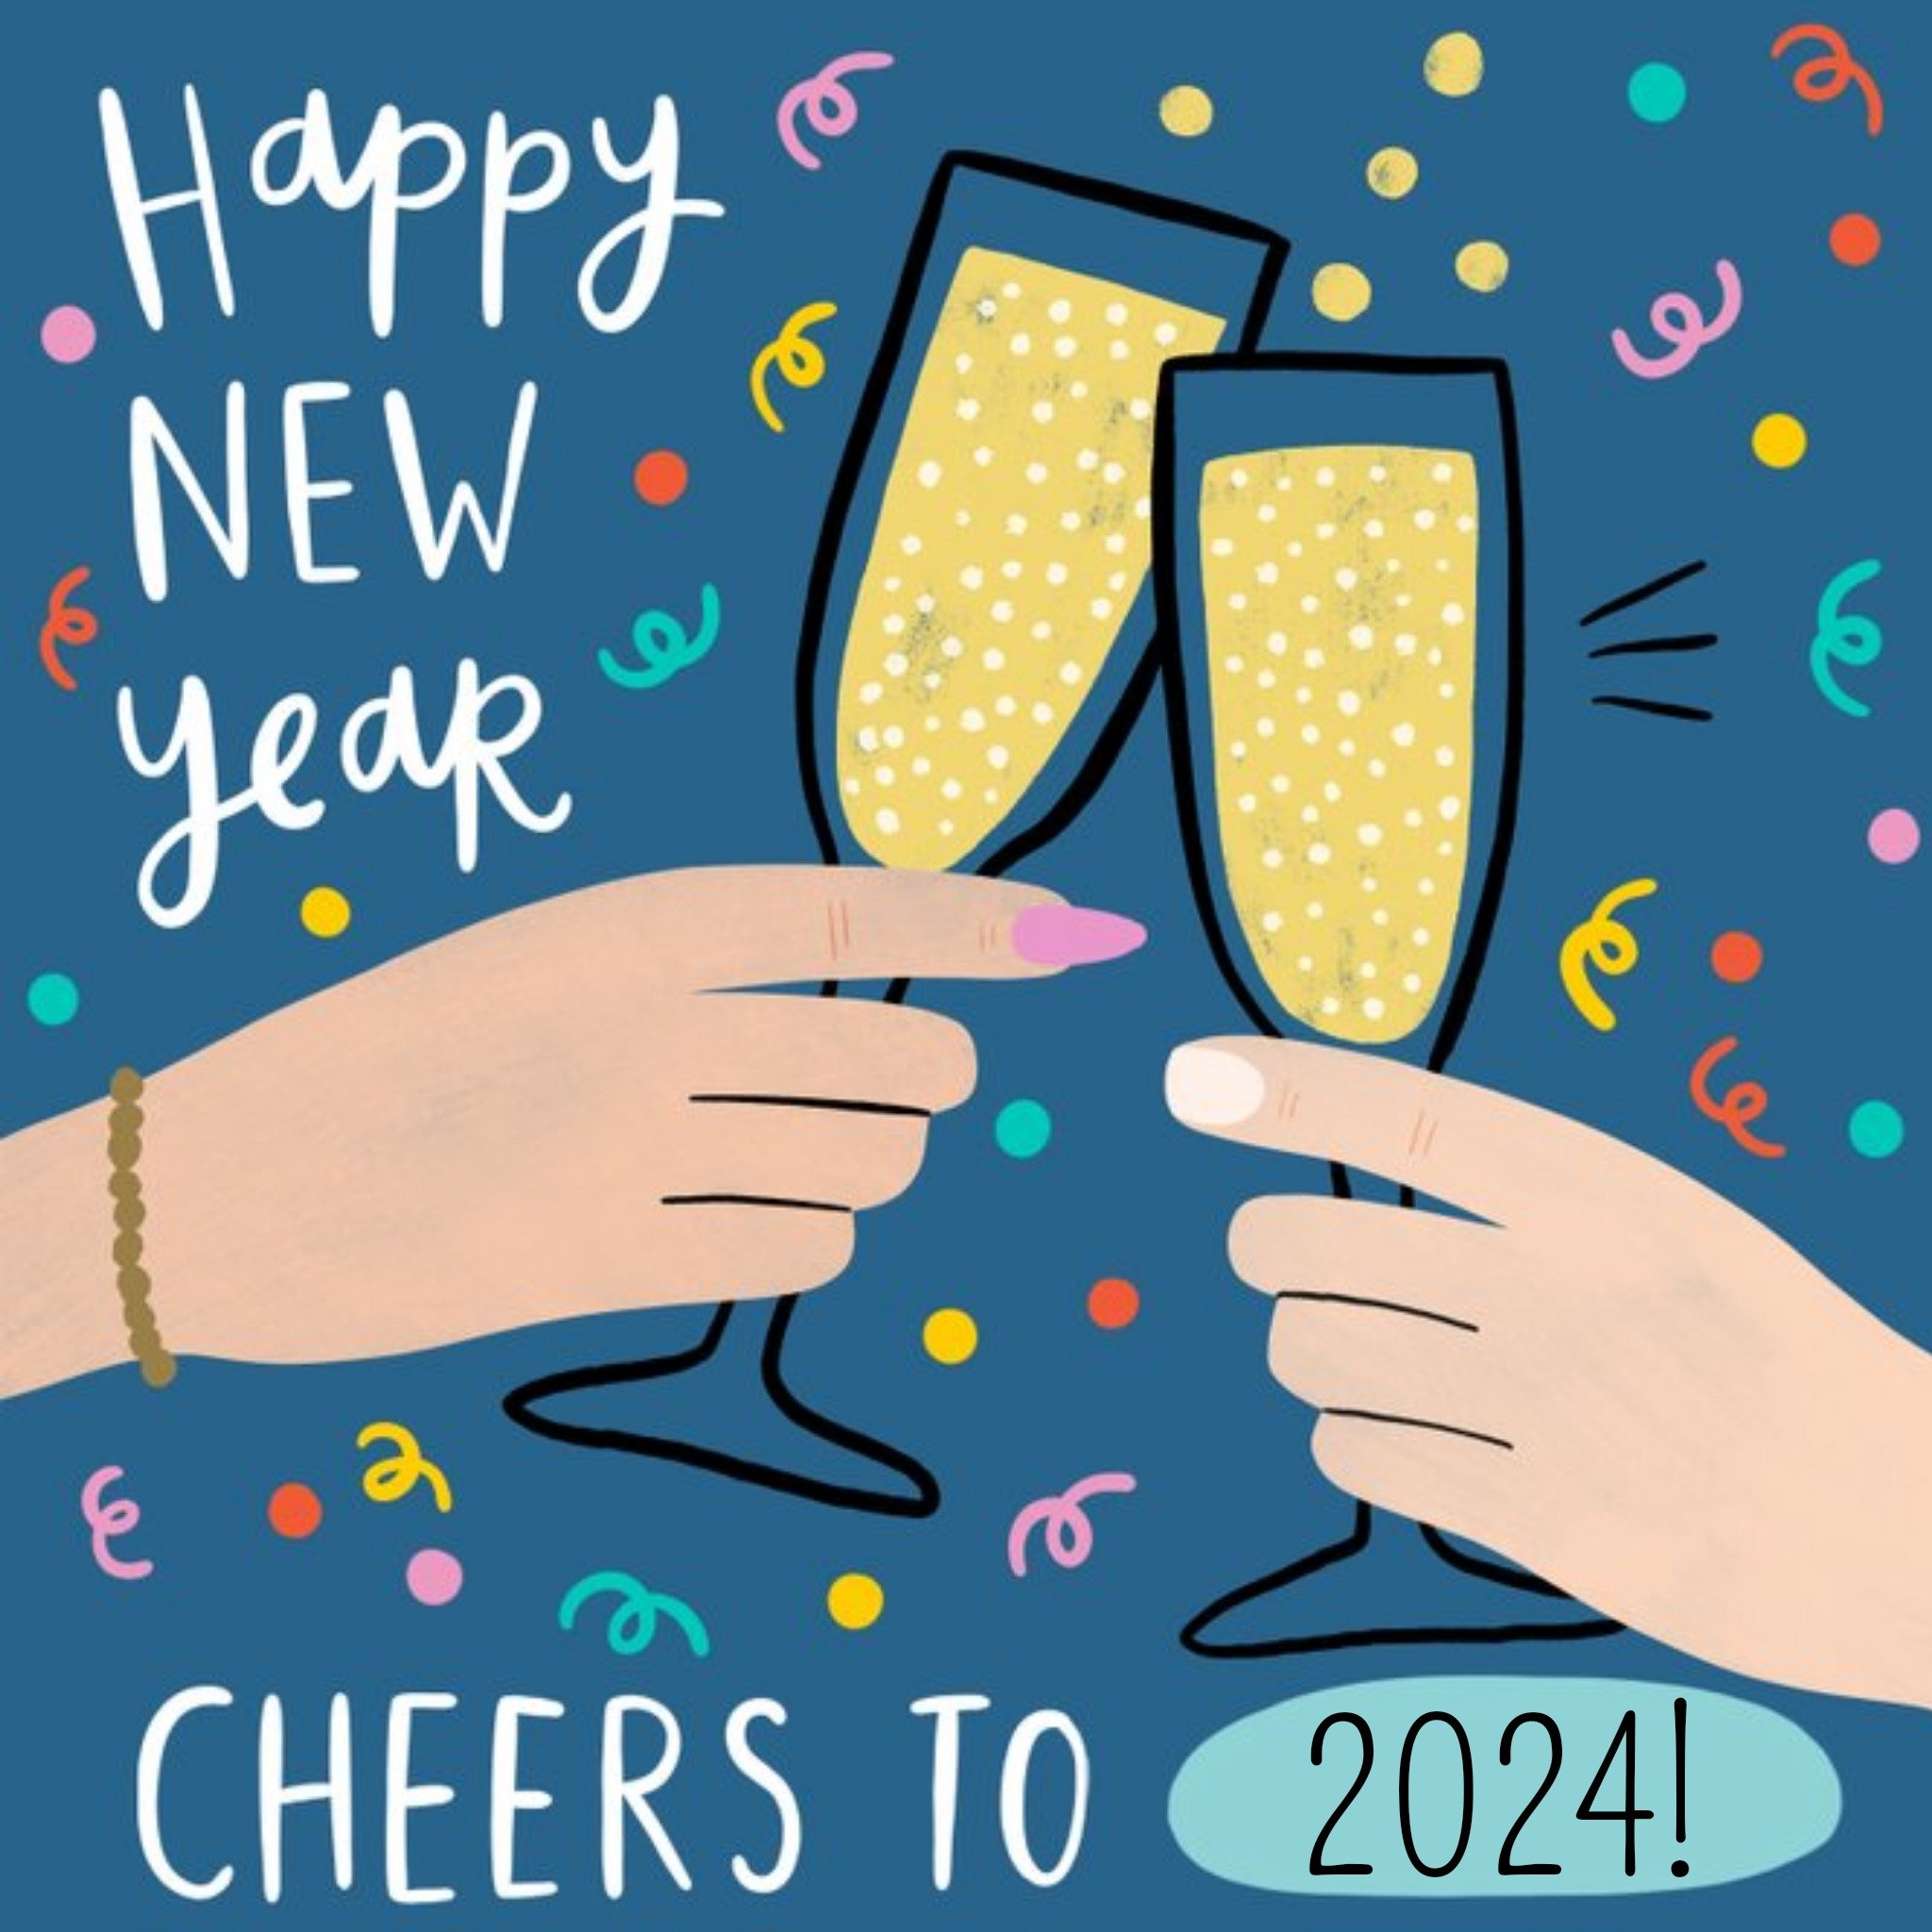 Moonpig Illustration Of A Celebratory Toast Happy New Year Card, Square